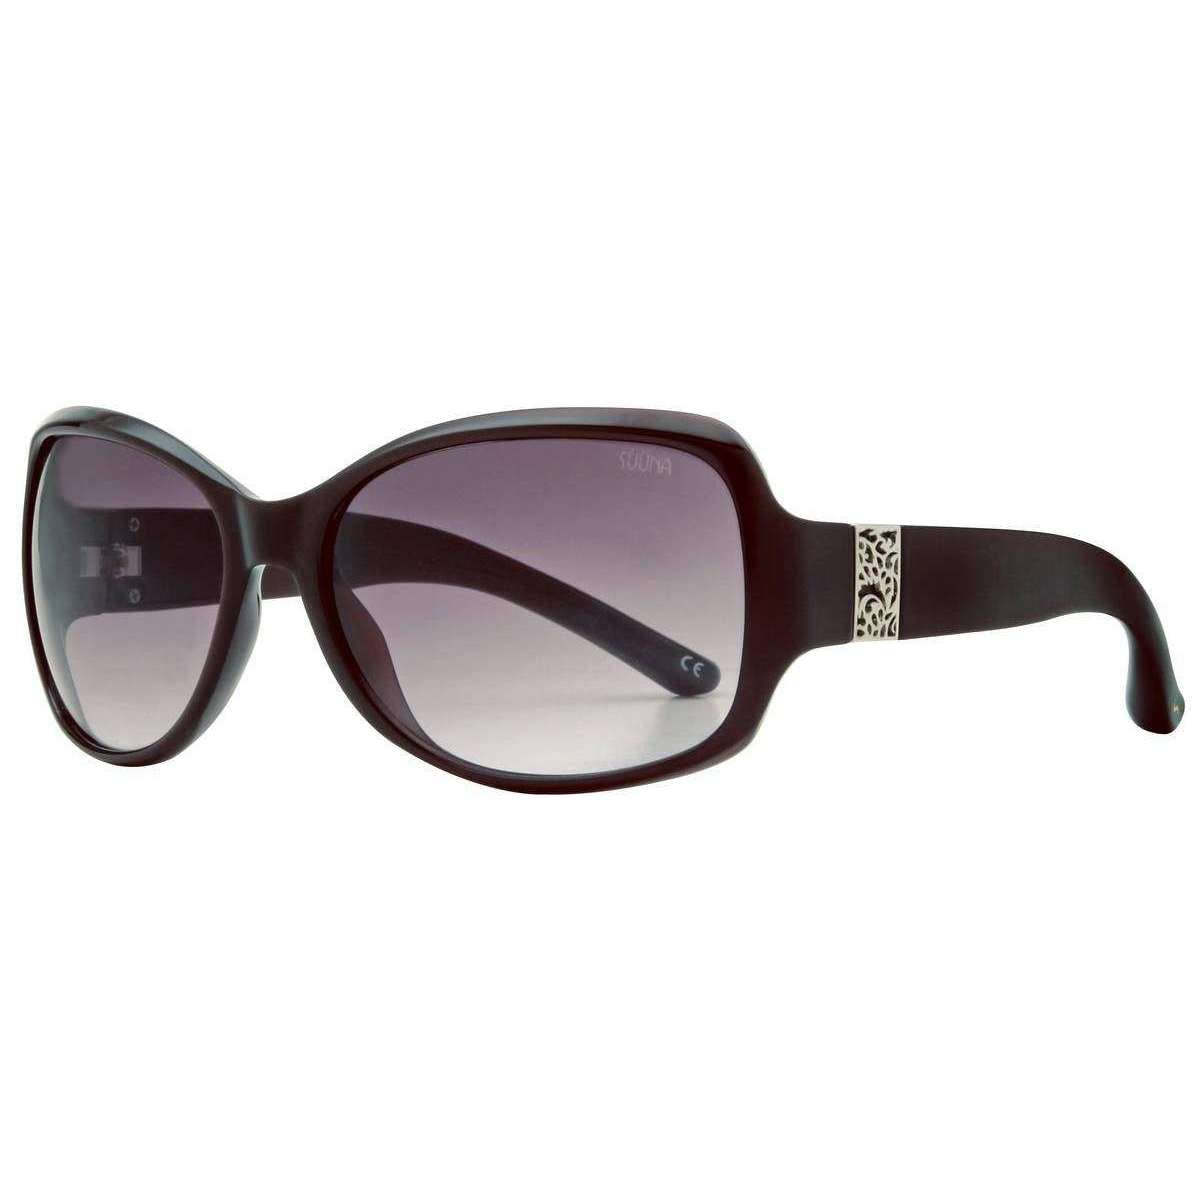 Suuna Georgia Plastic Wrap Sunglasses - Milky Plum Purple